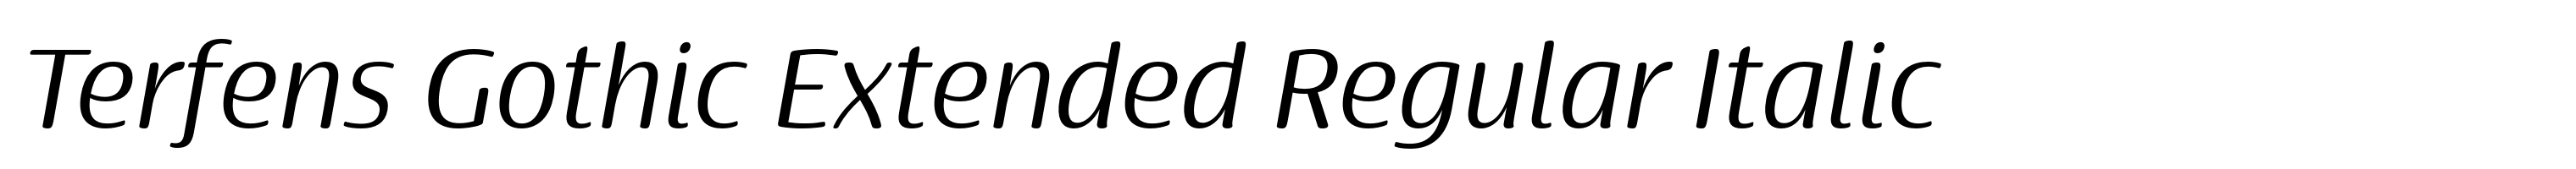 Terfens Gothic Extended Regular Italic